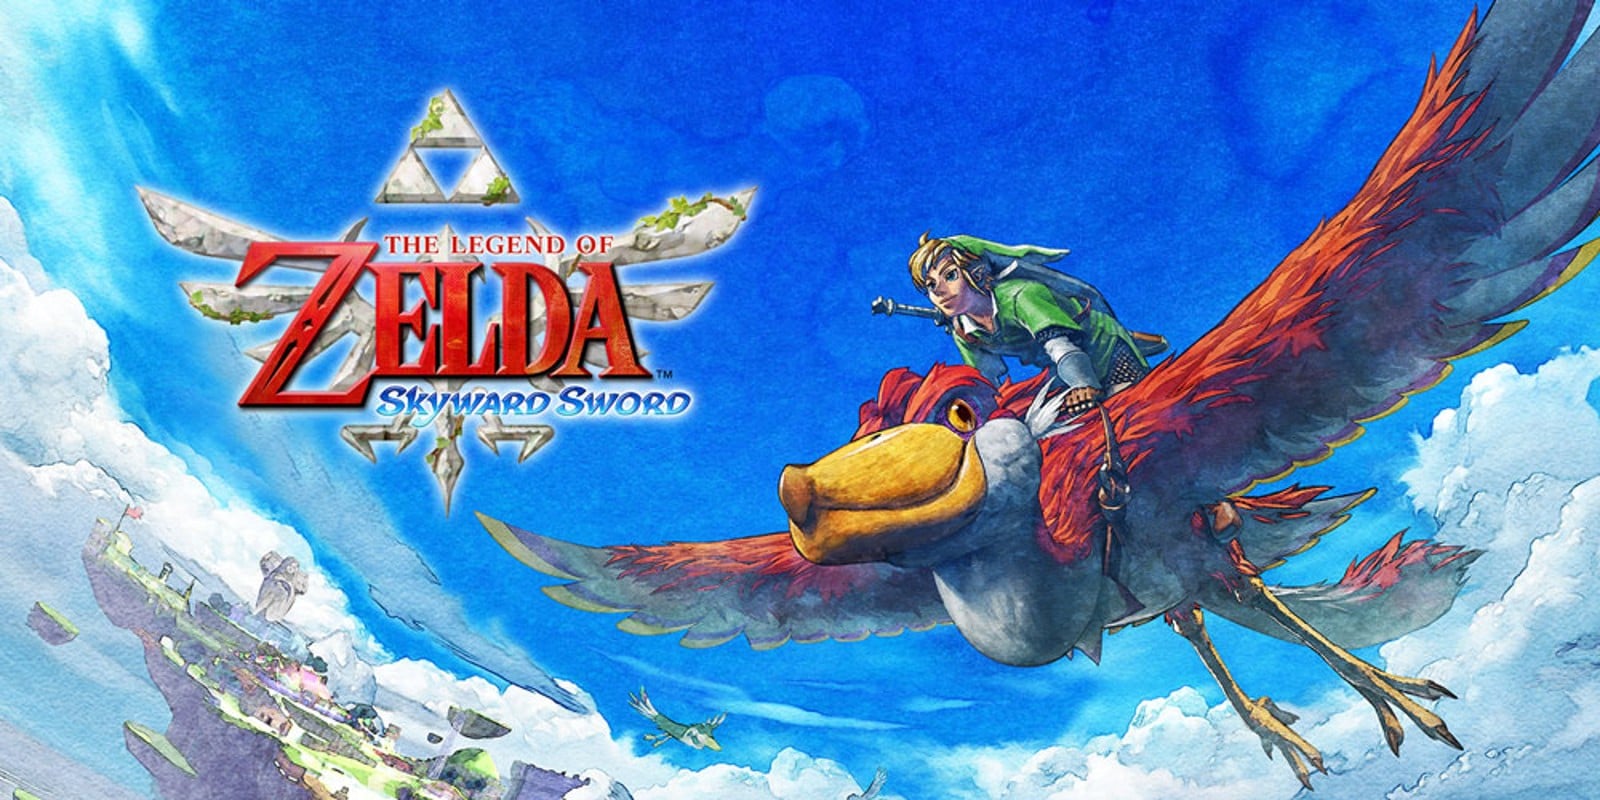 The Legend of Zelda -Skyward Sword -GamersrD